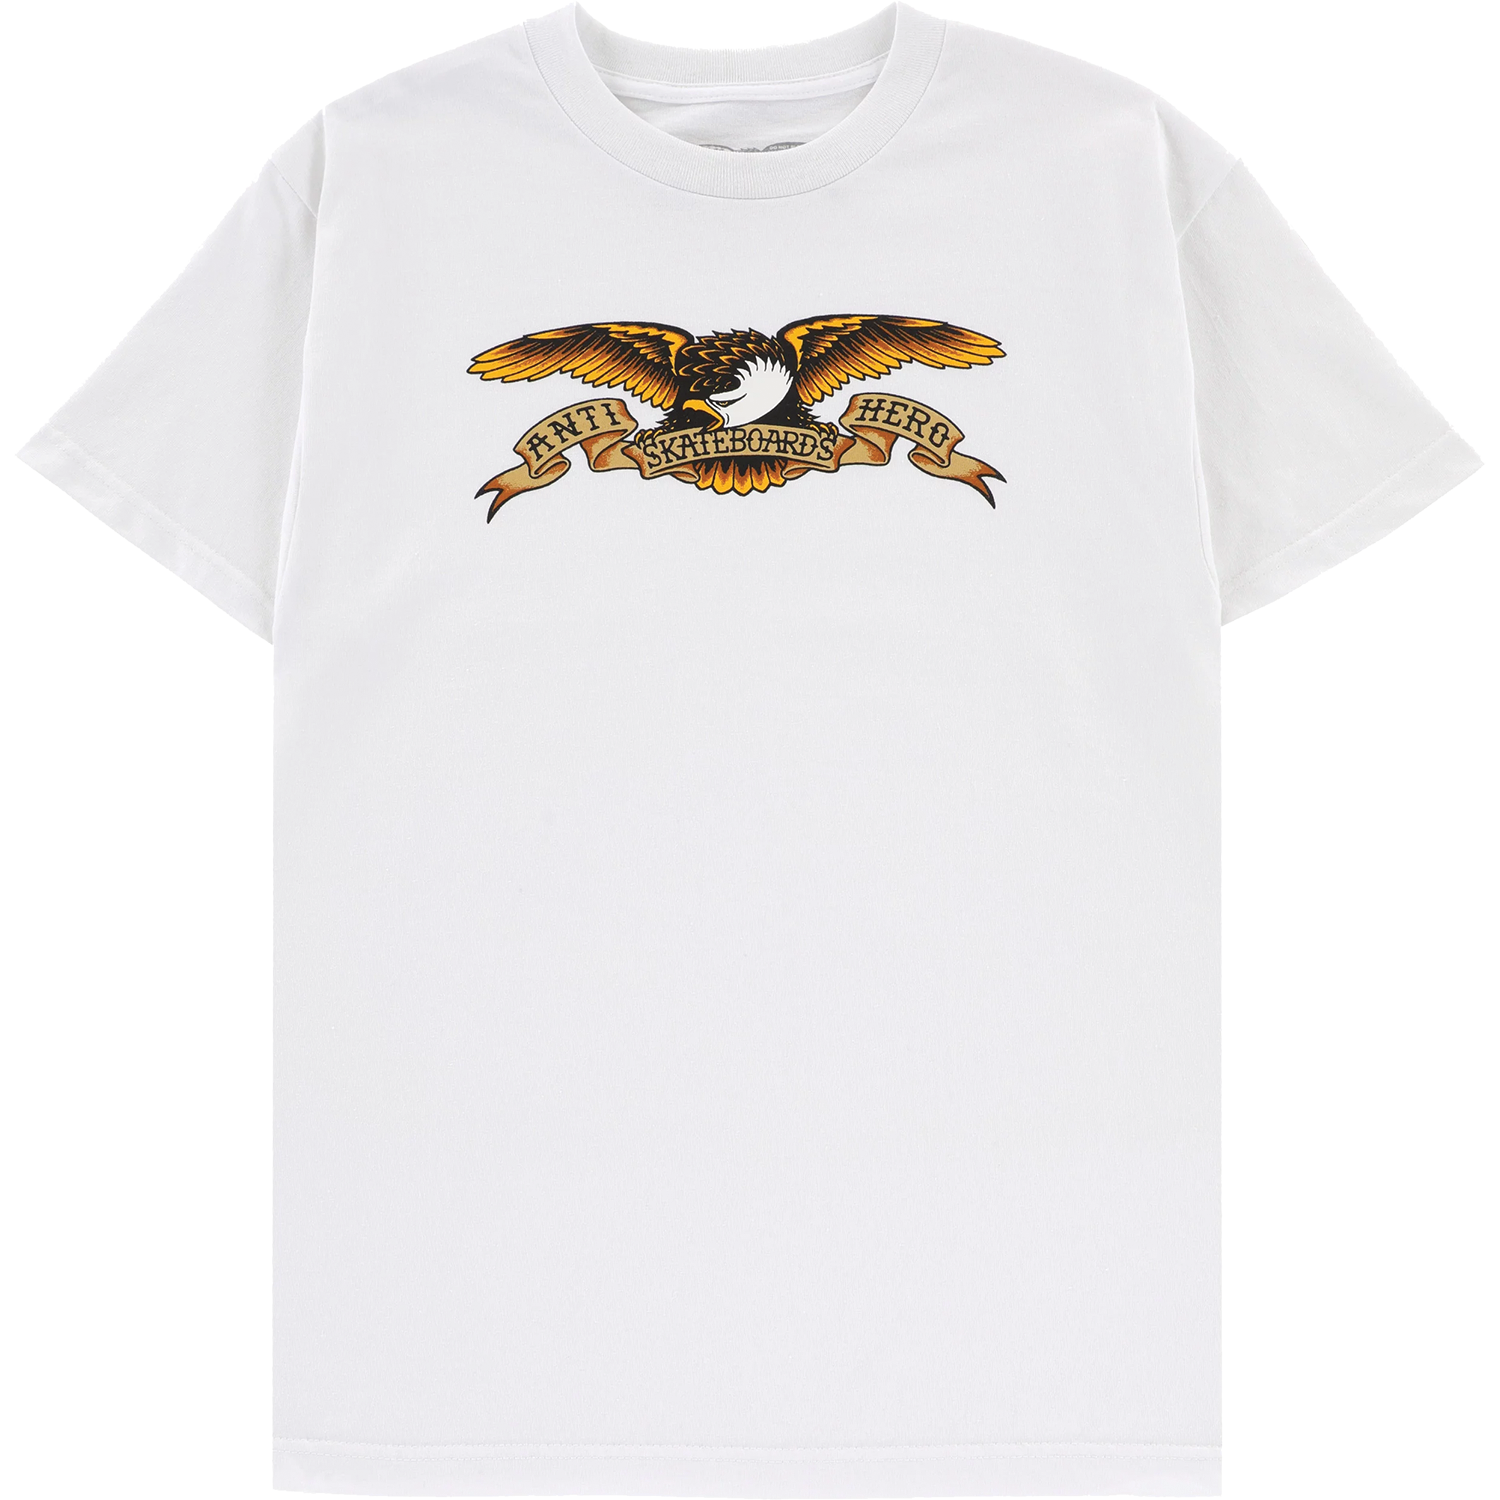 Antihero Eagle T-Shirt - Size: SMALL White/Blue Multi